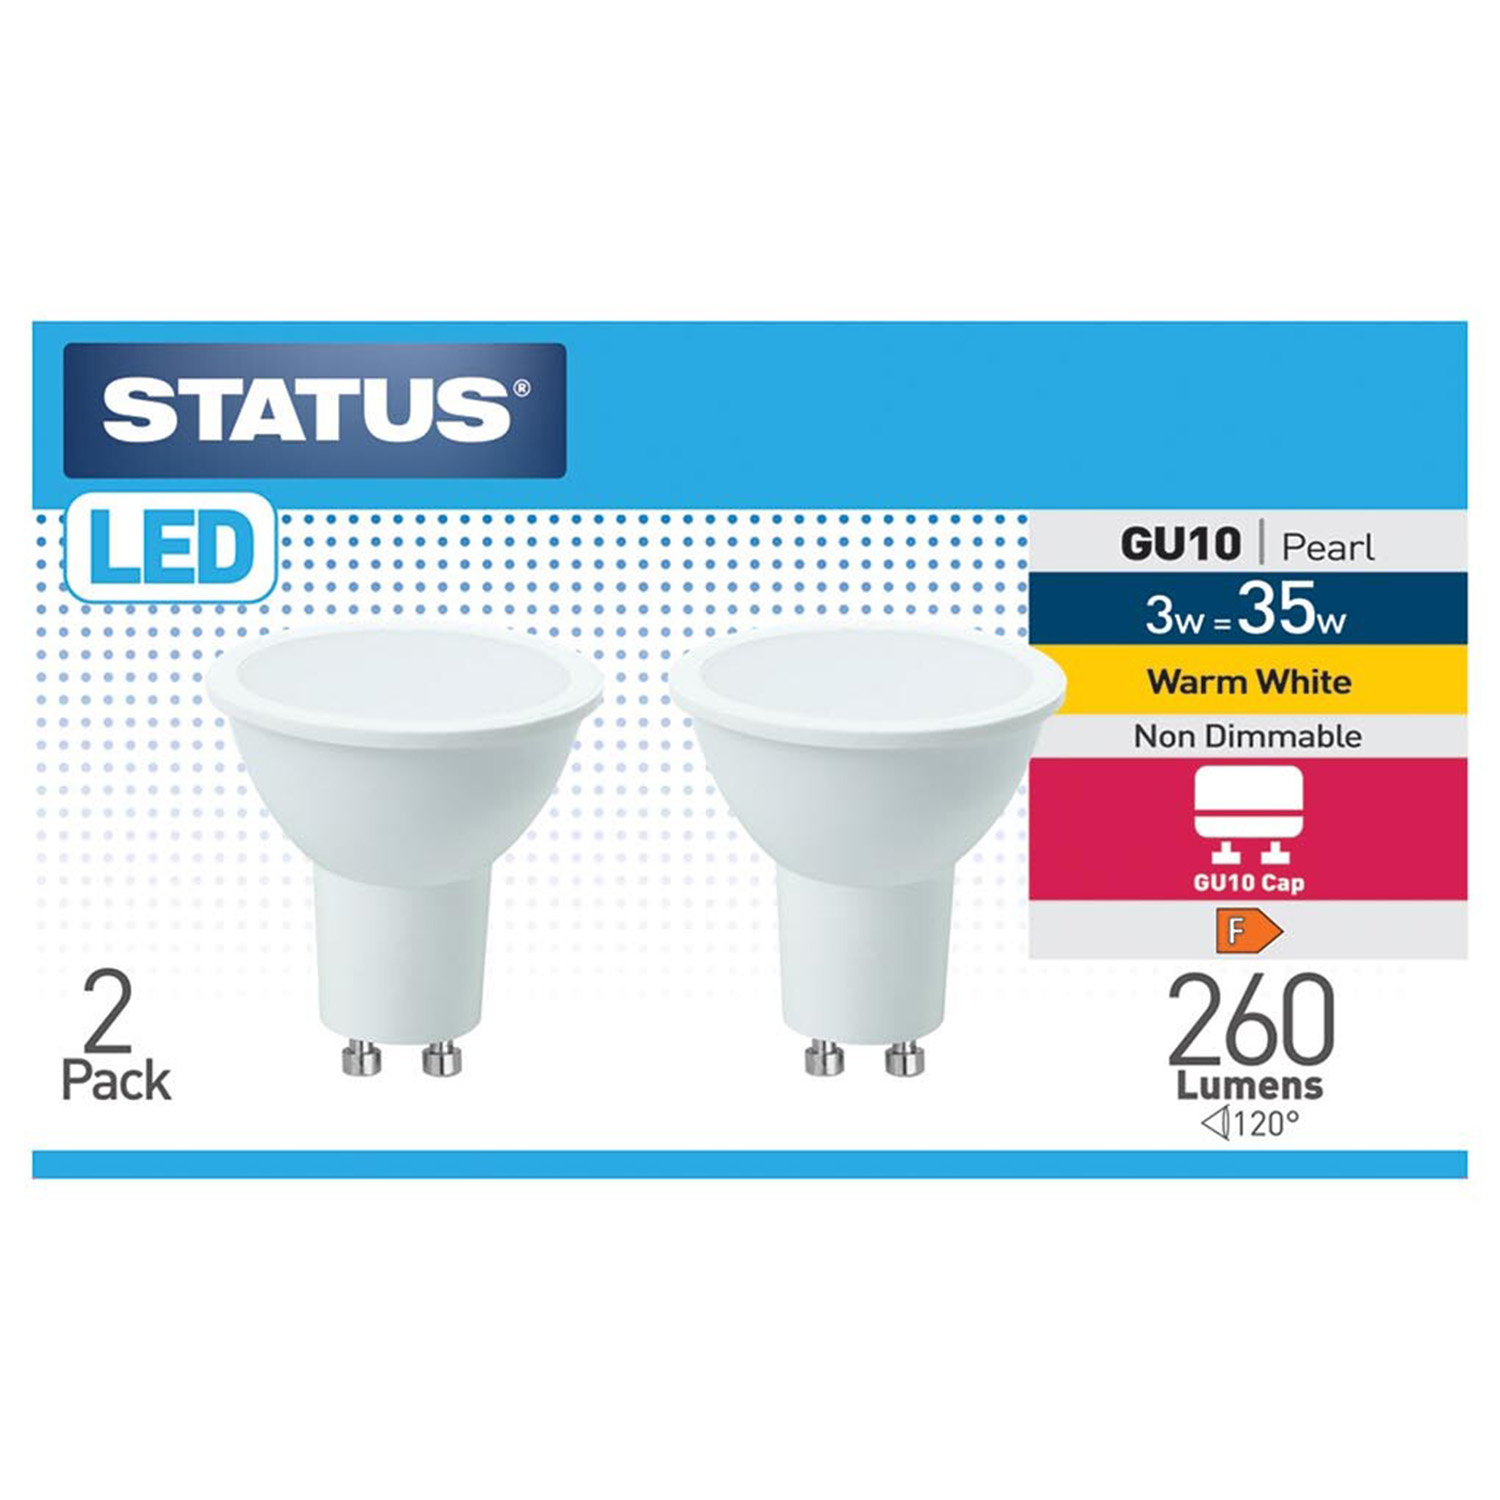 Status GU10 Pearl Warm White LED 3w 2 Pack Image 1